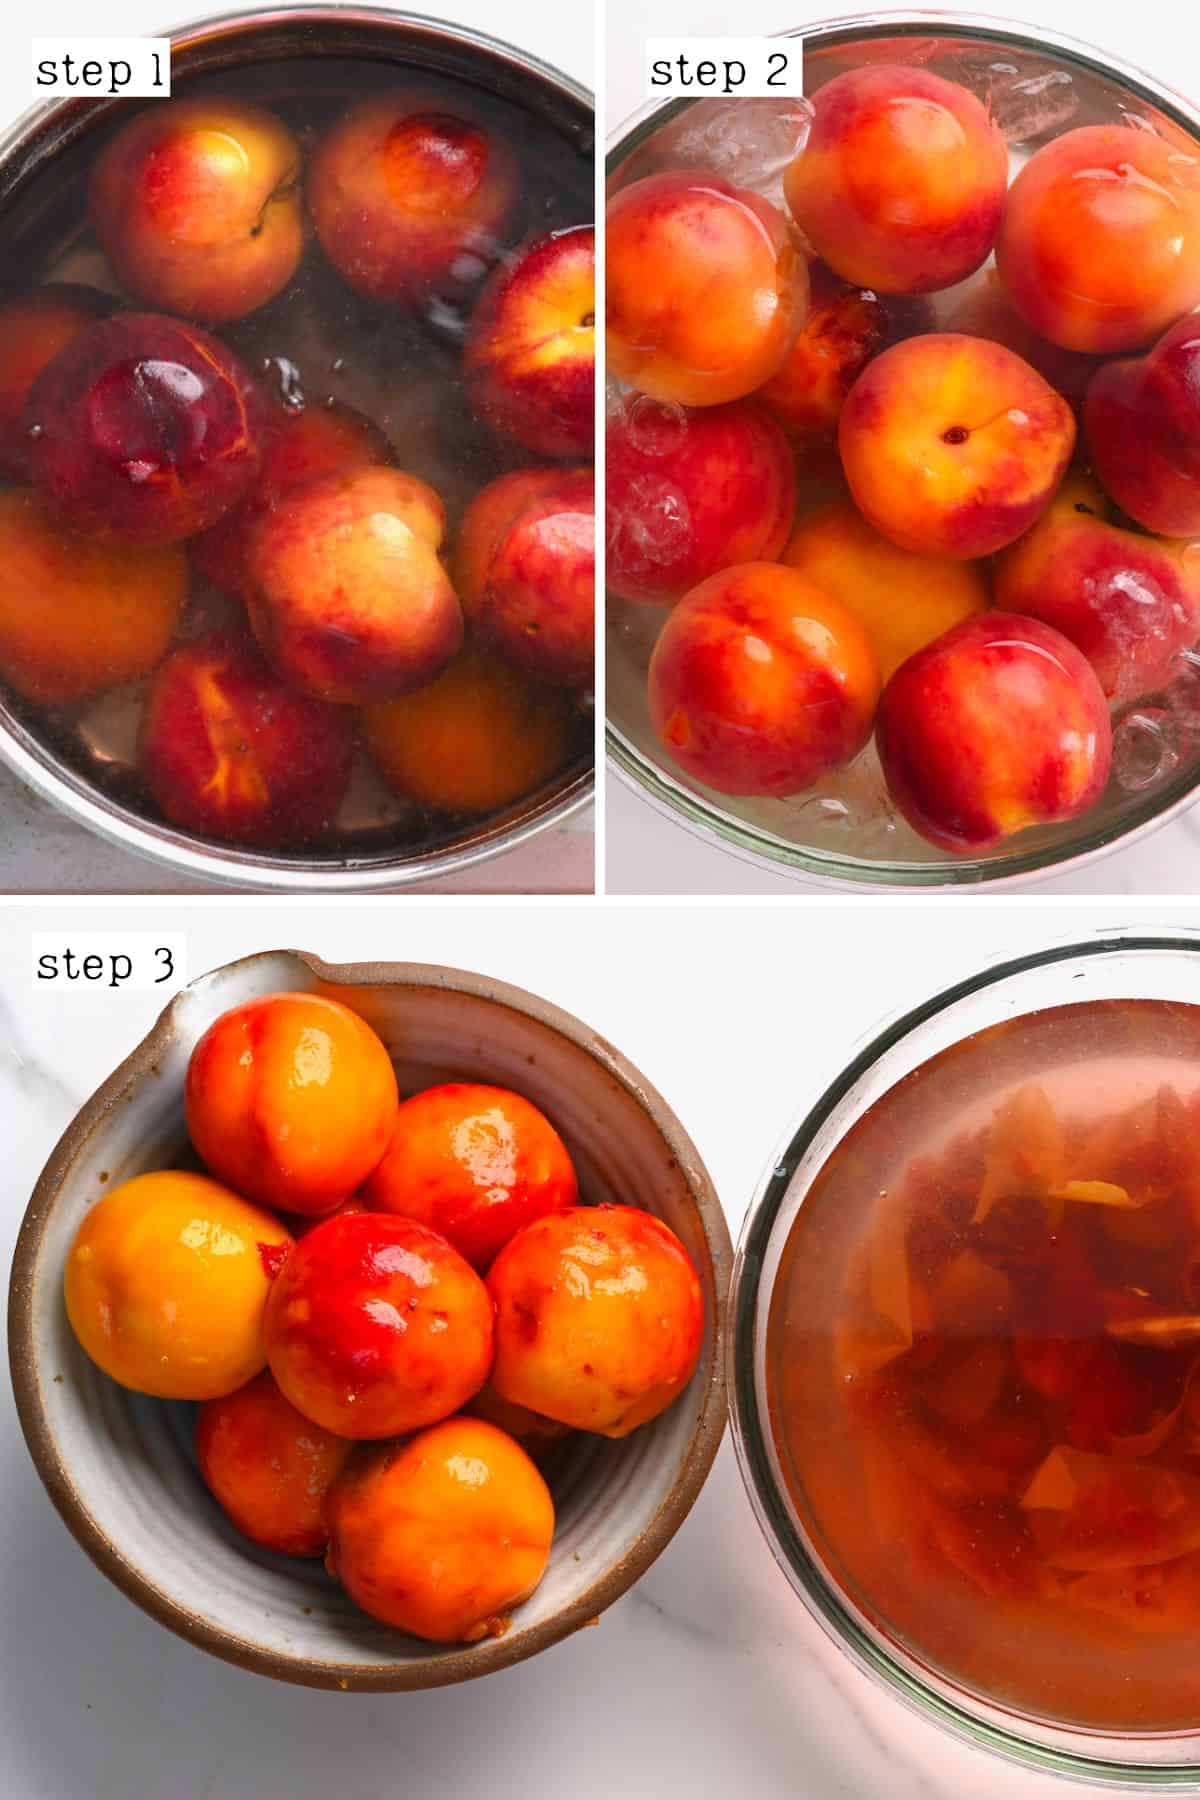 Steps for peeling peaches